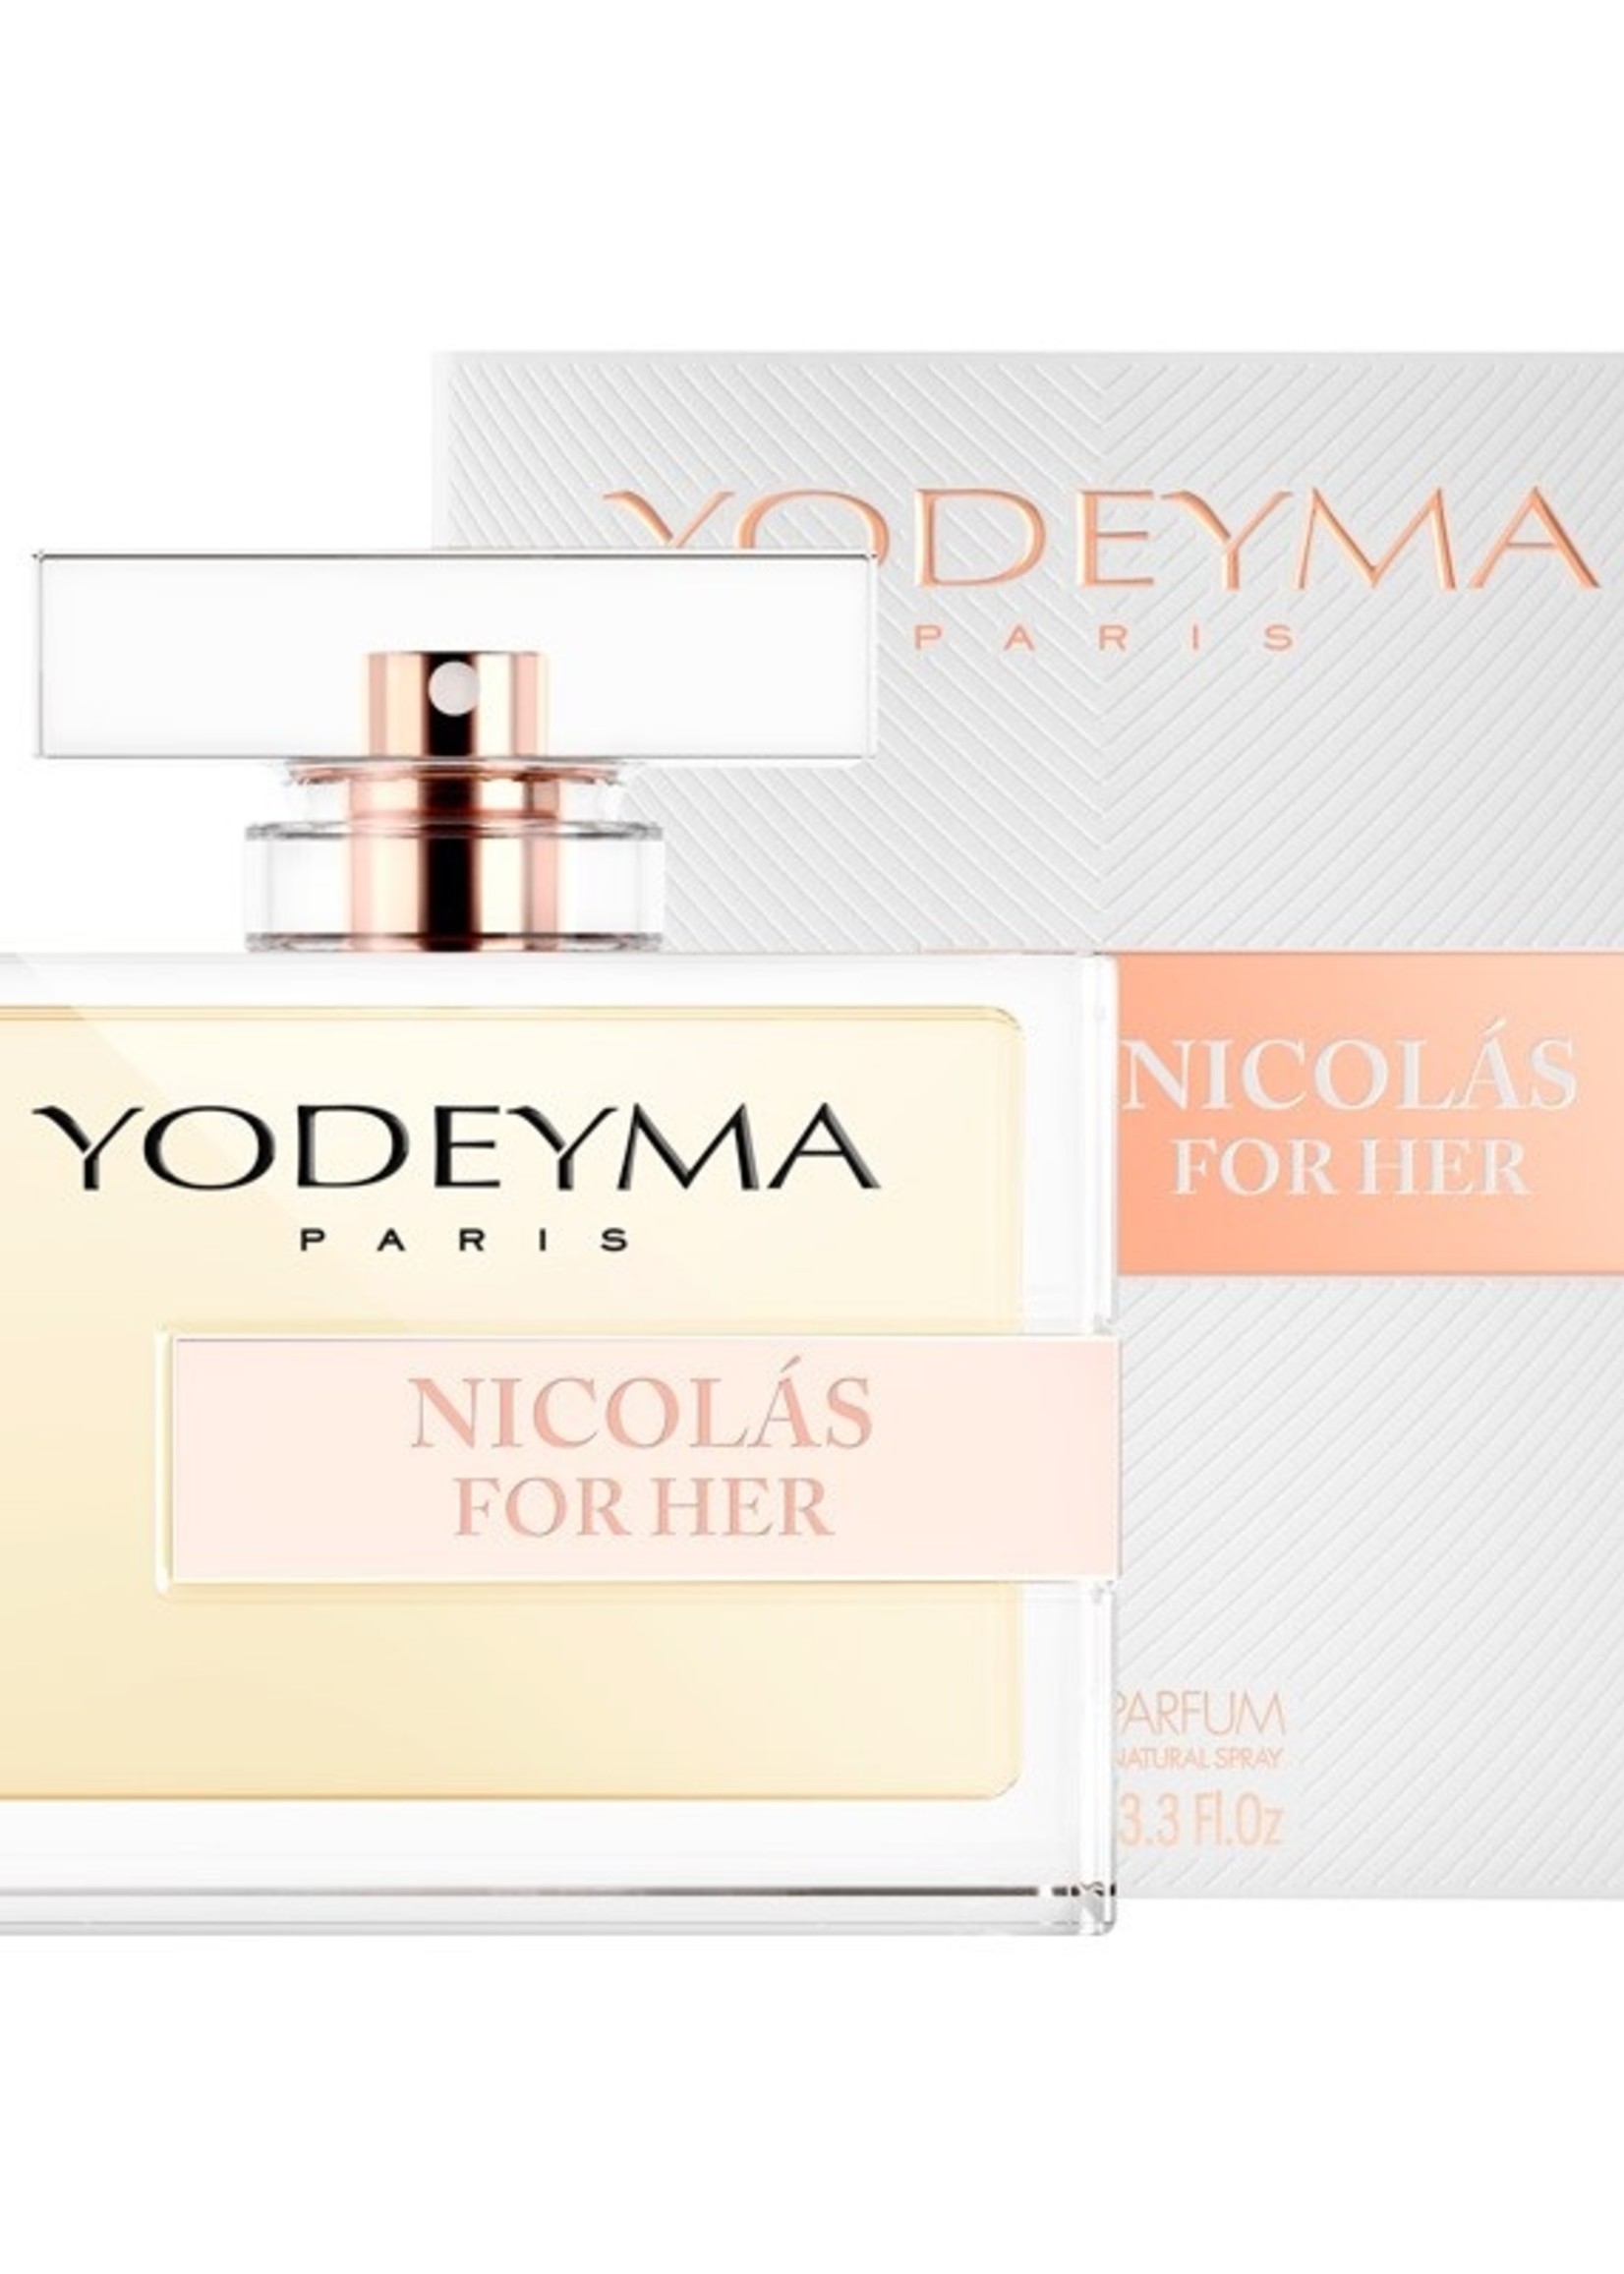 Yodeyma Parfums NICOLÁS FOR HER Eau de Parfum 100 ml.